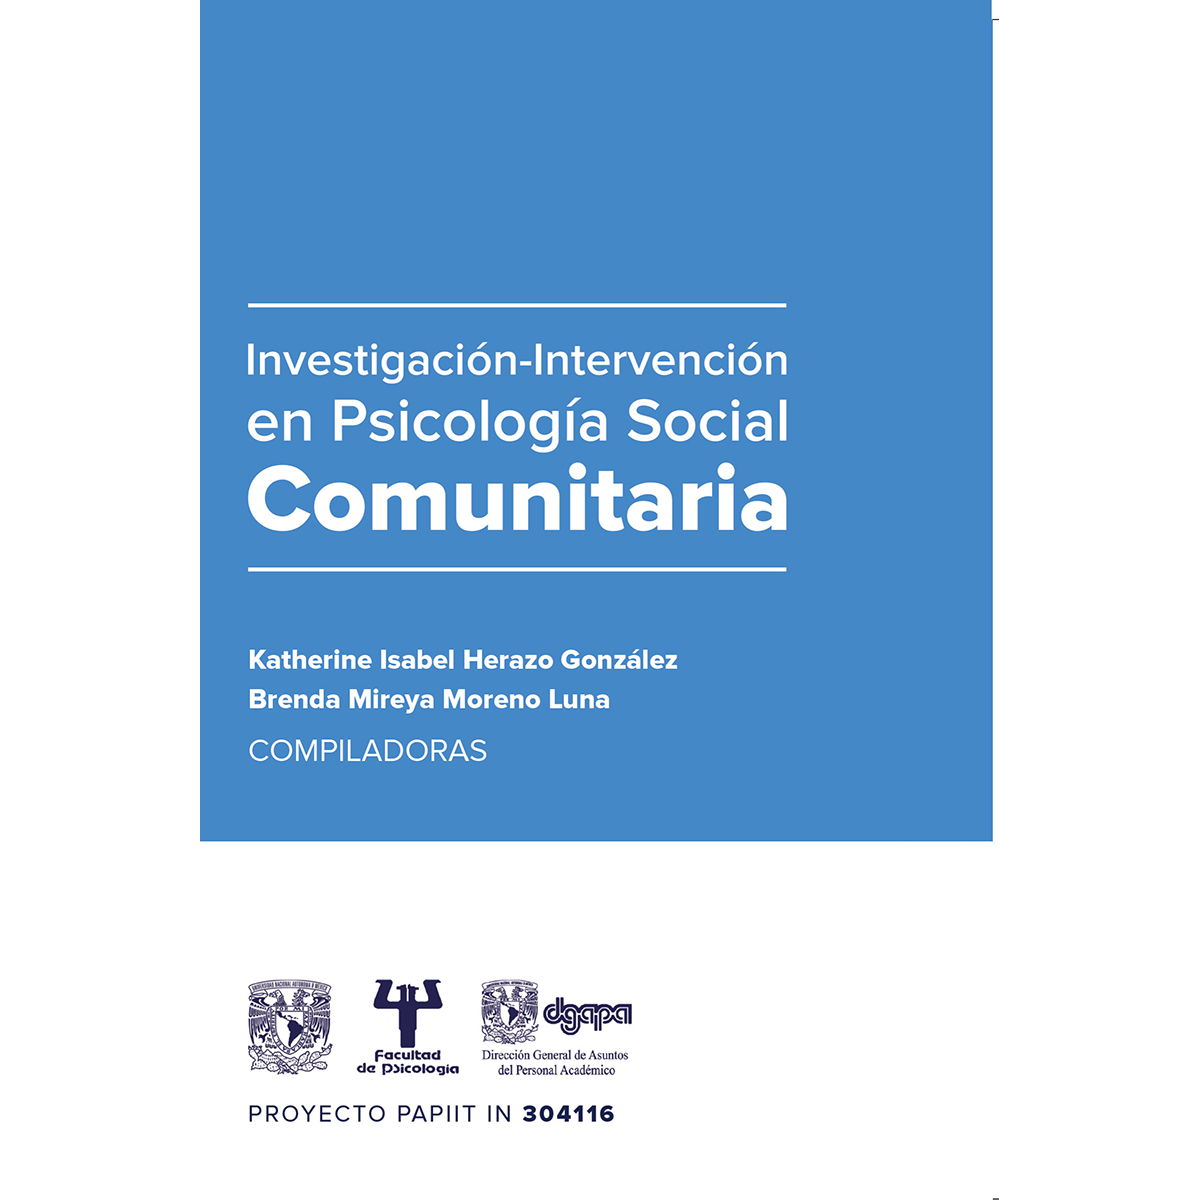 INVESTIGACIÓN-INTERVENCIÓN EN PSICOLOGÍA SOCIAL COMUNITARIA